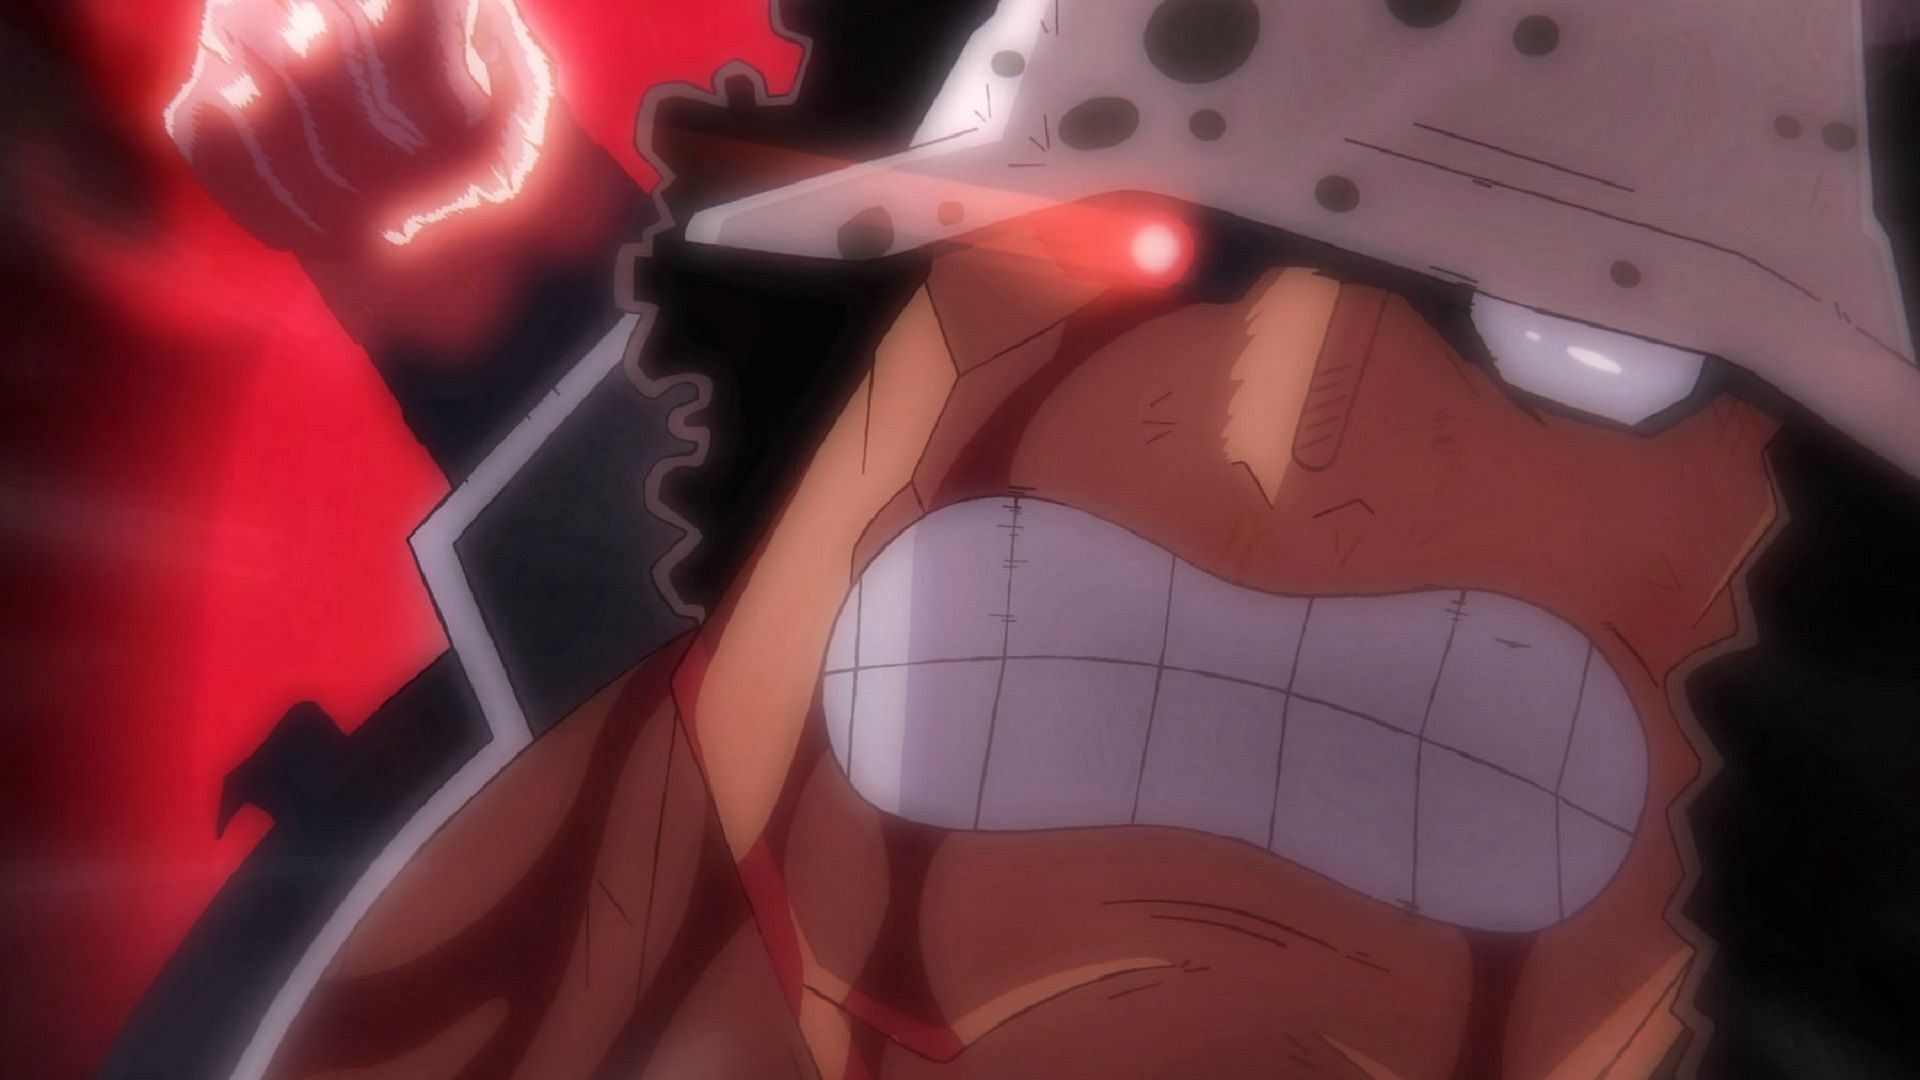 Kuma attacking Saturn in One Piece (Image via Shueisha)